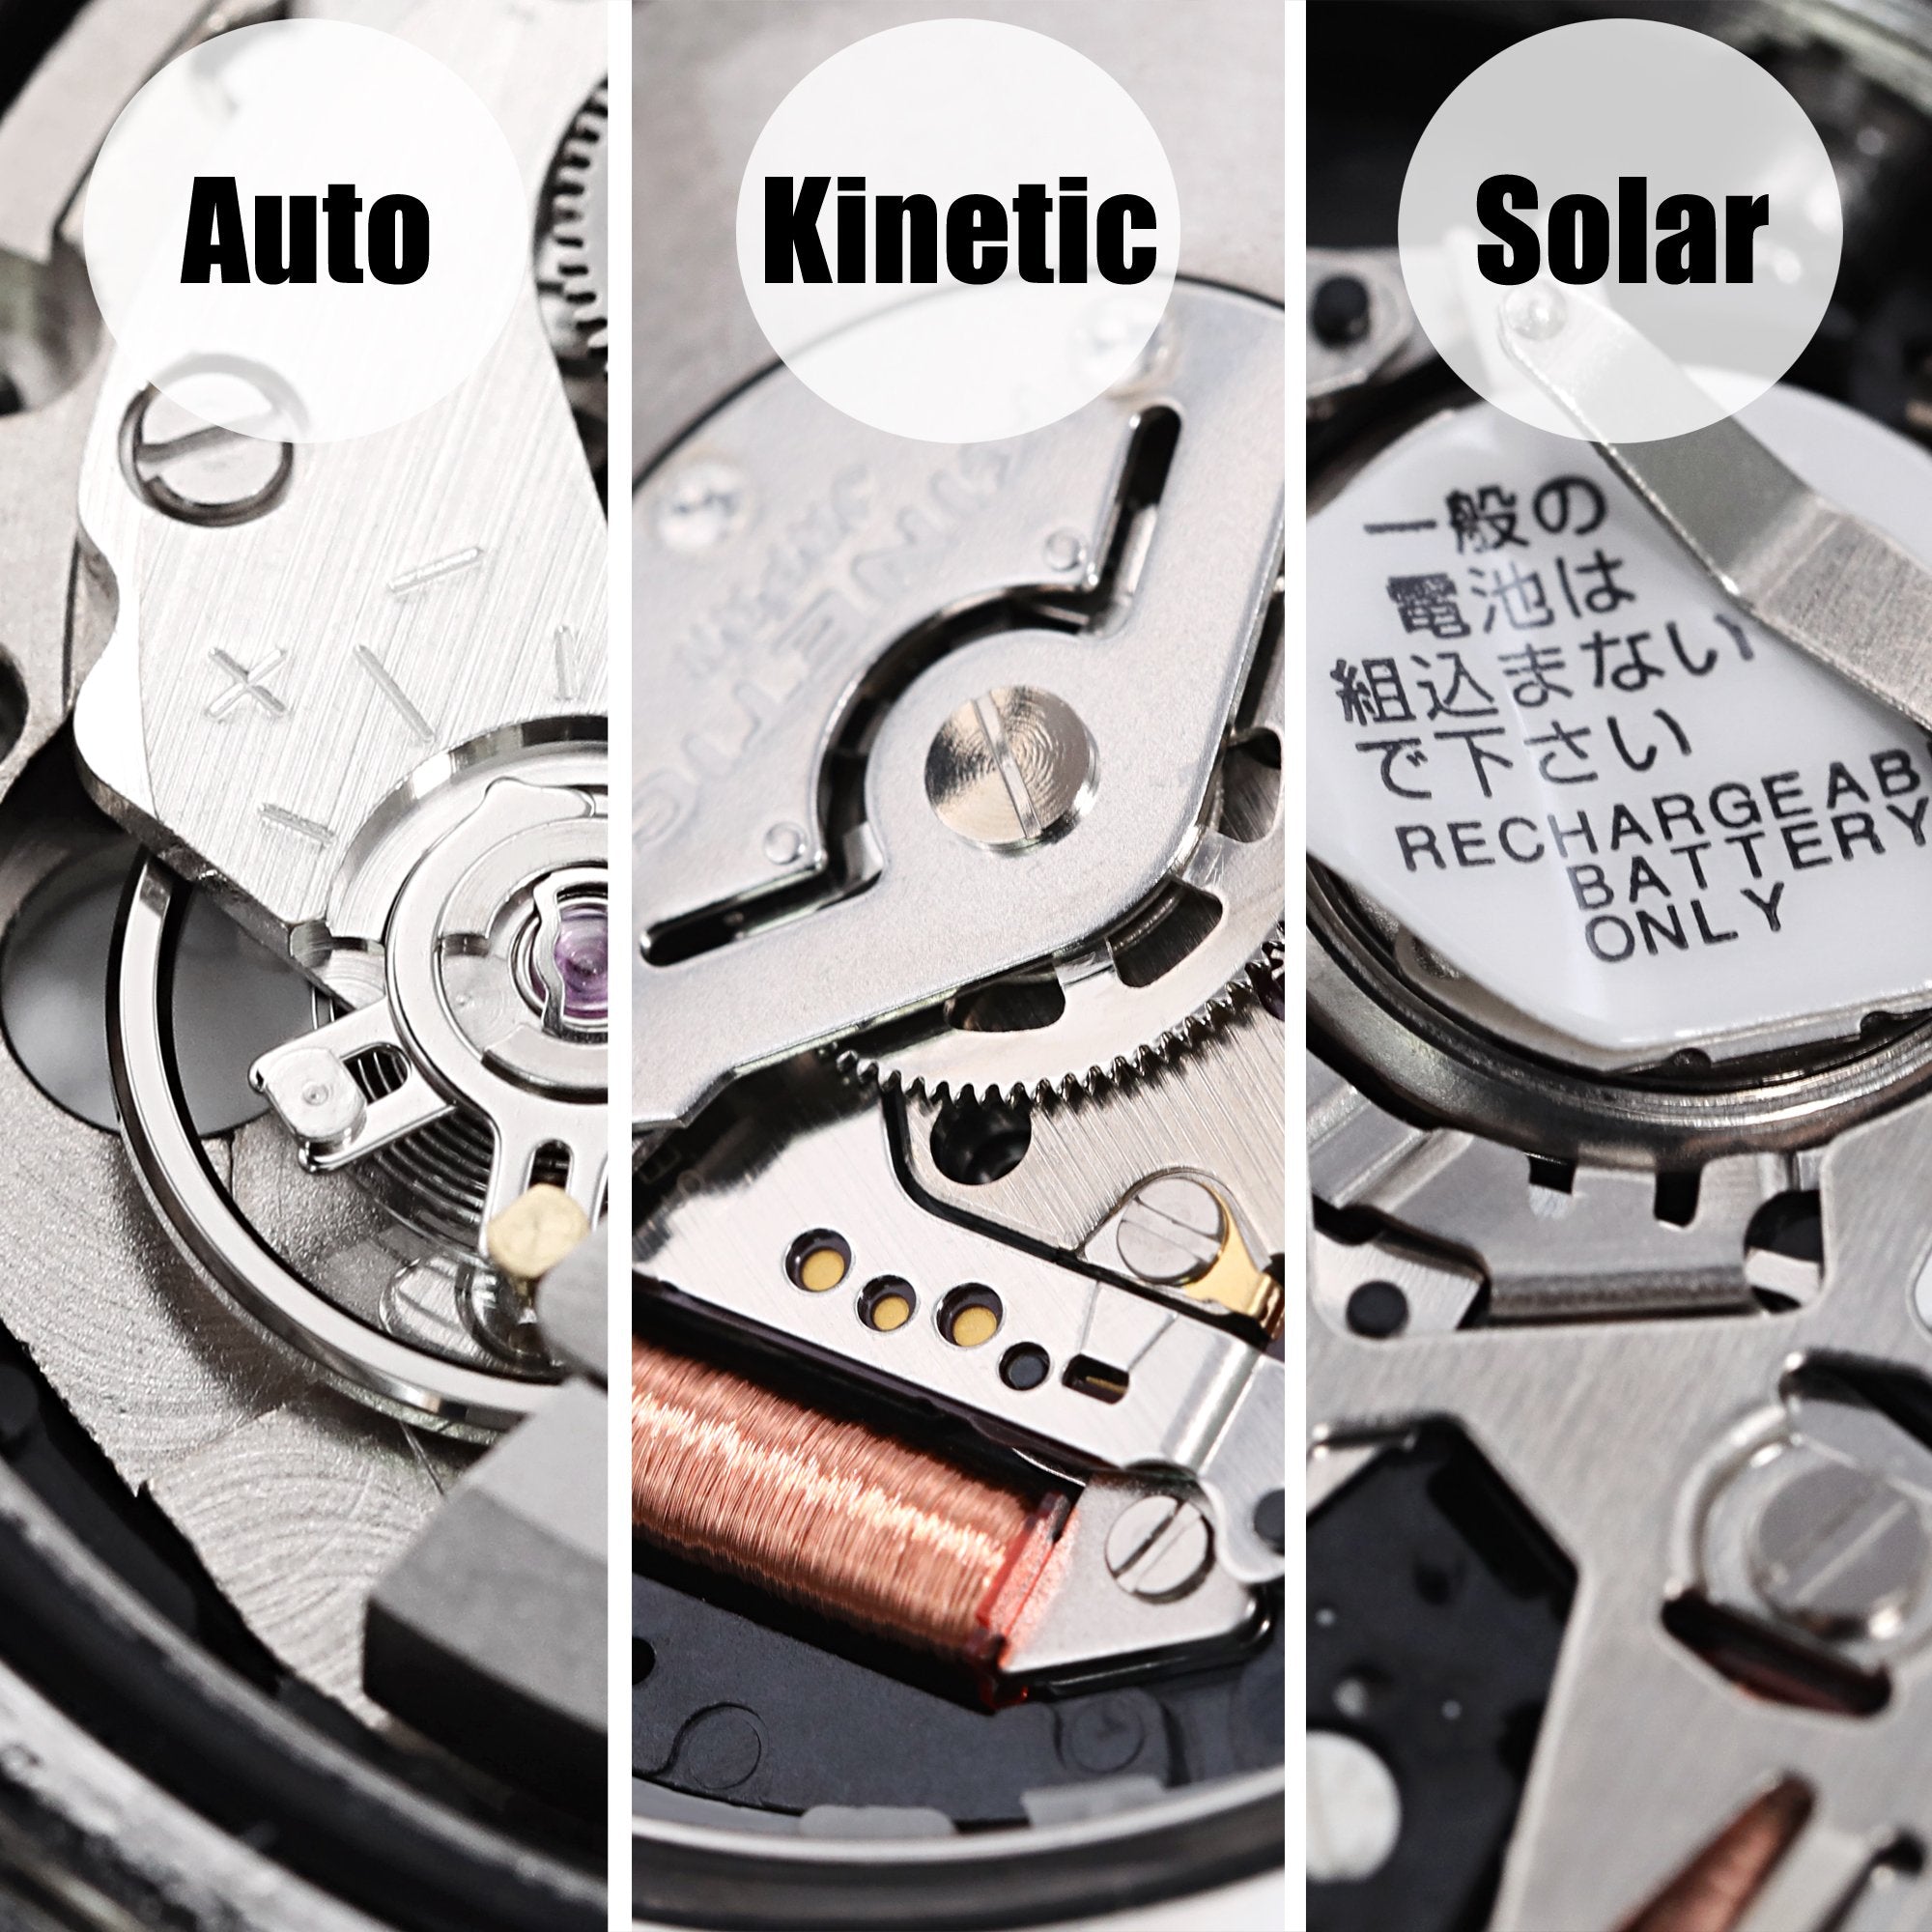 Seiko Automatic Kinetic vs Solar watches Seiko Movements -